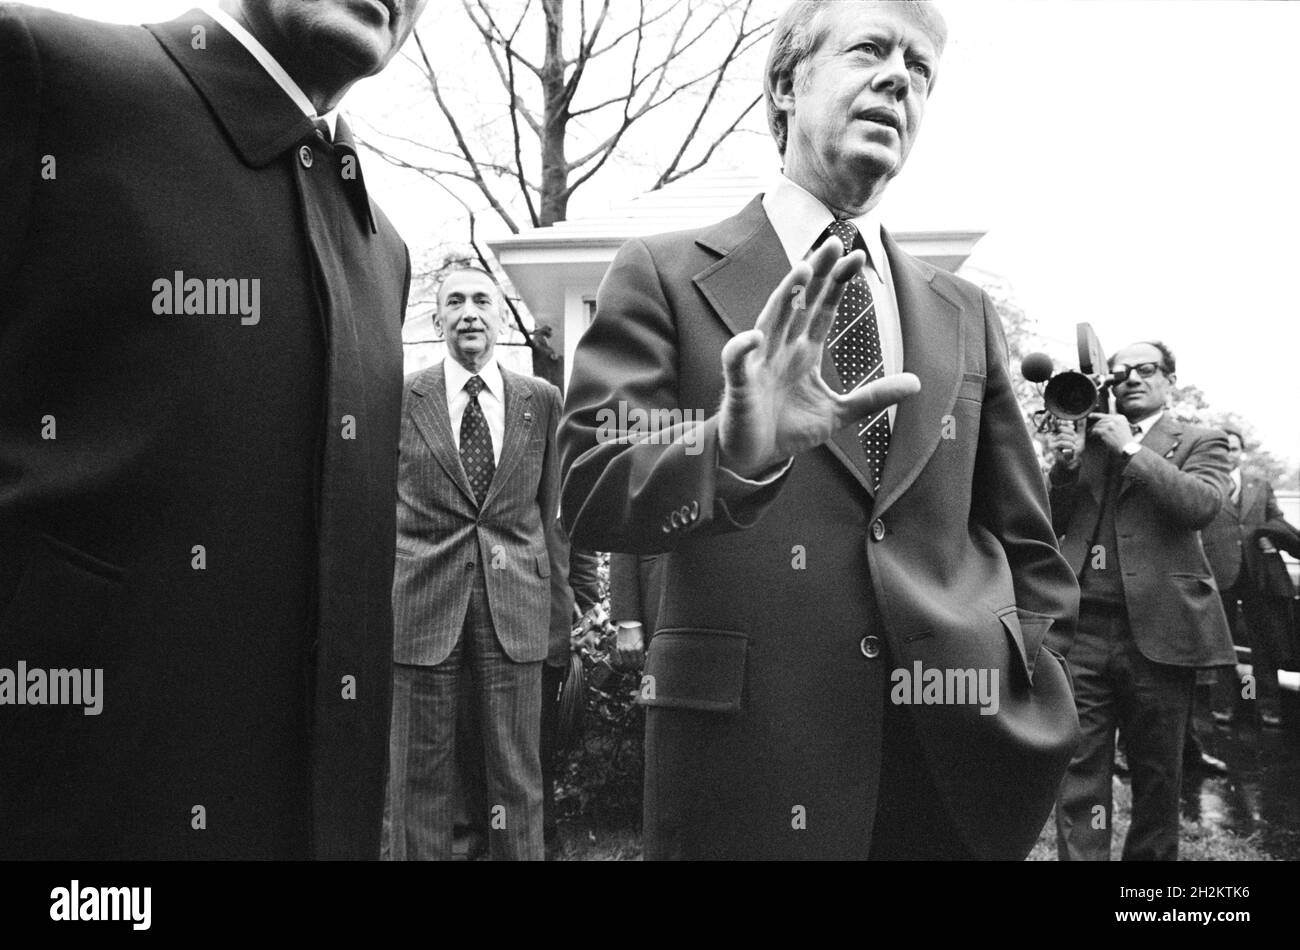 U.S. President Jimmy Carter with Egyptian President Anwar Sadat at the White House, Washington, D.C., USA, Marion S. Trikosko, US News & World Report Magazine Collection, April 5, 1977 Stock Photo